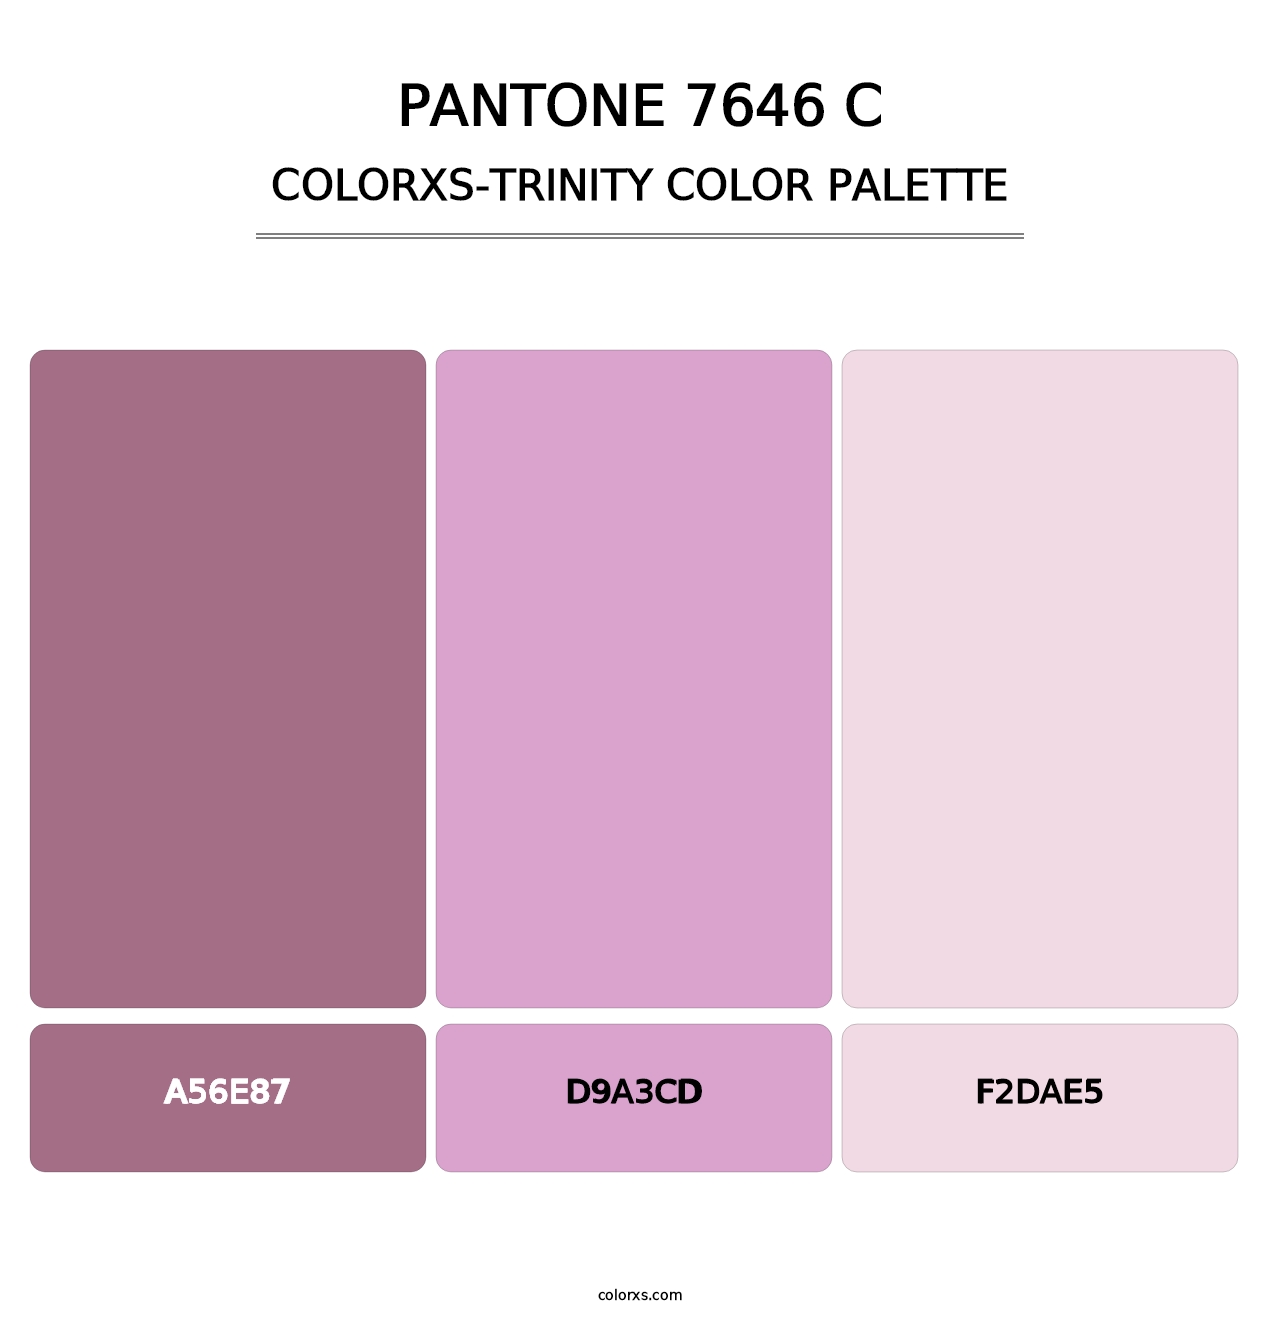 PANTONE 7646 C - Colorxs Trinity Palette